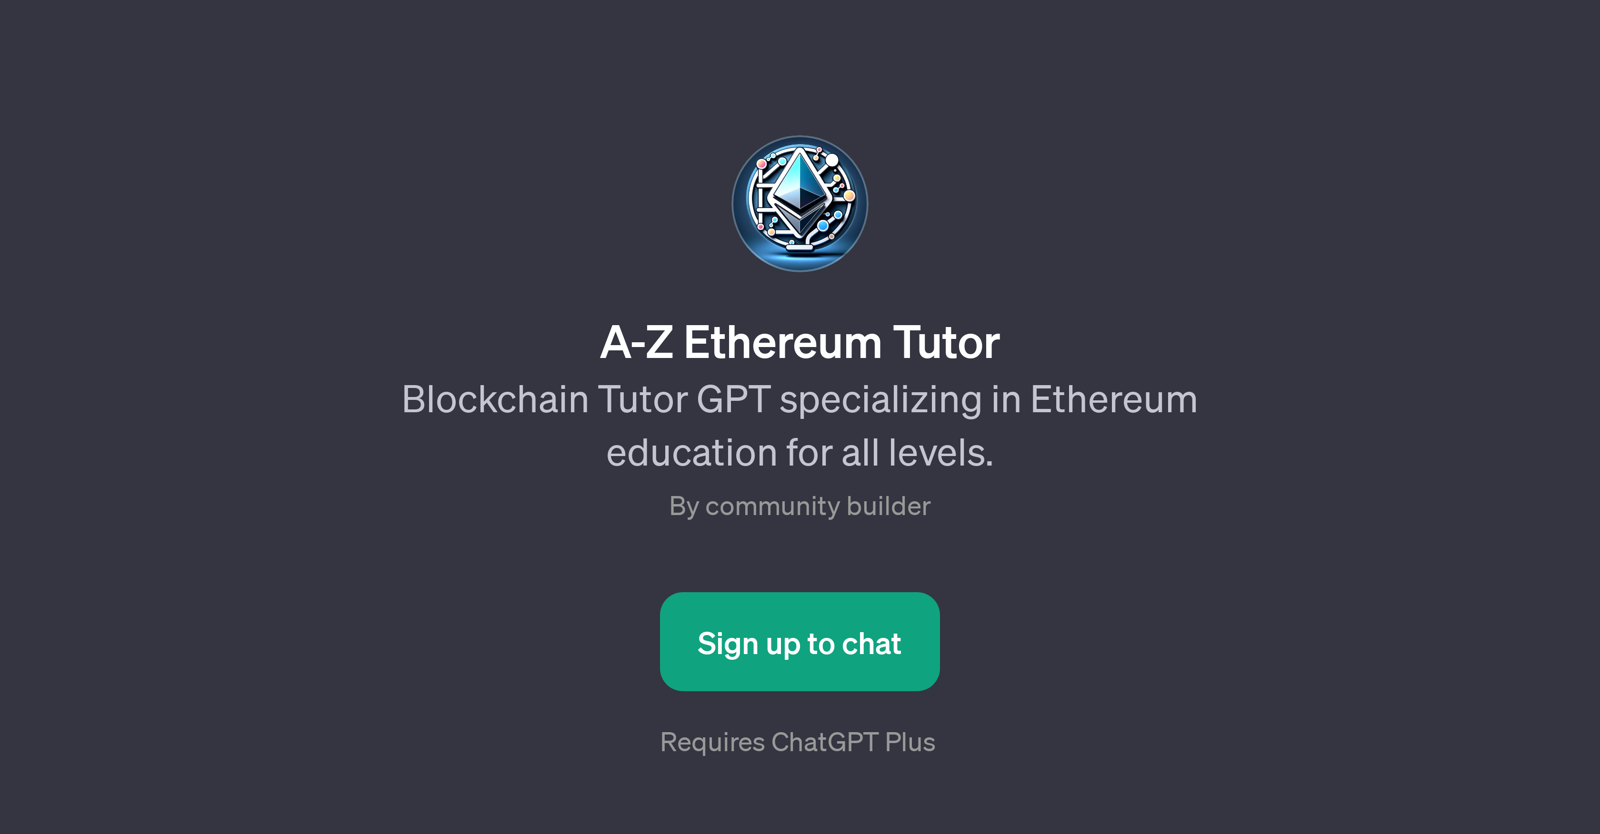 A-Z Ethereum Tutor website